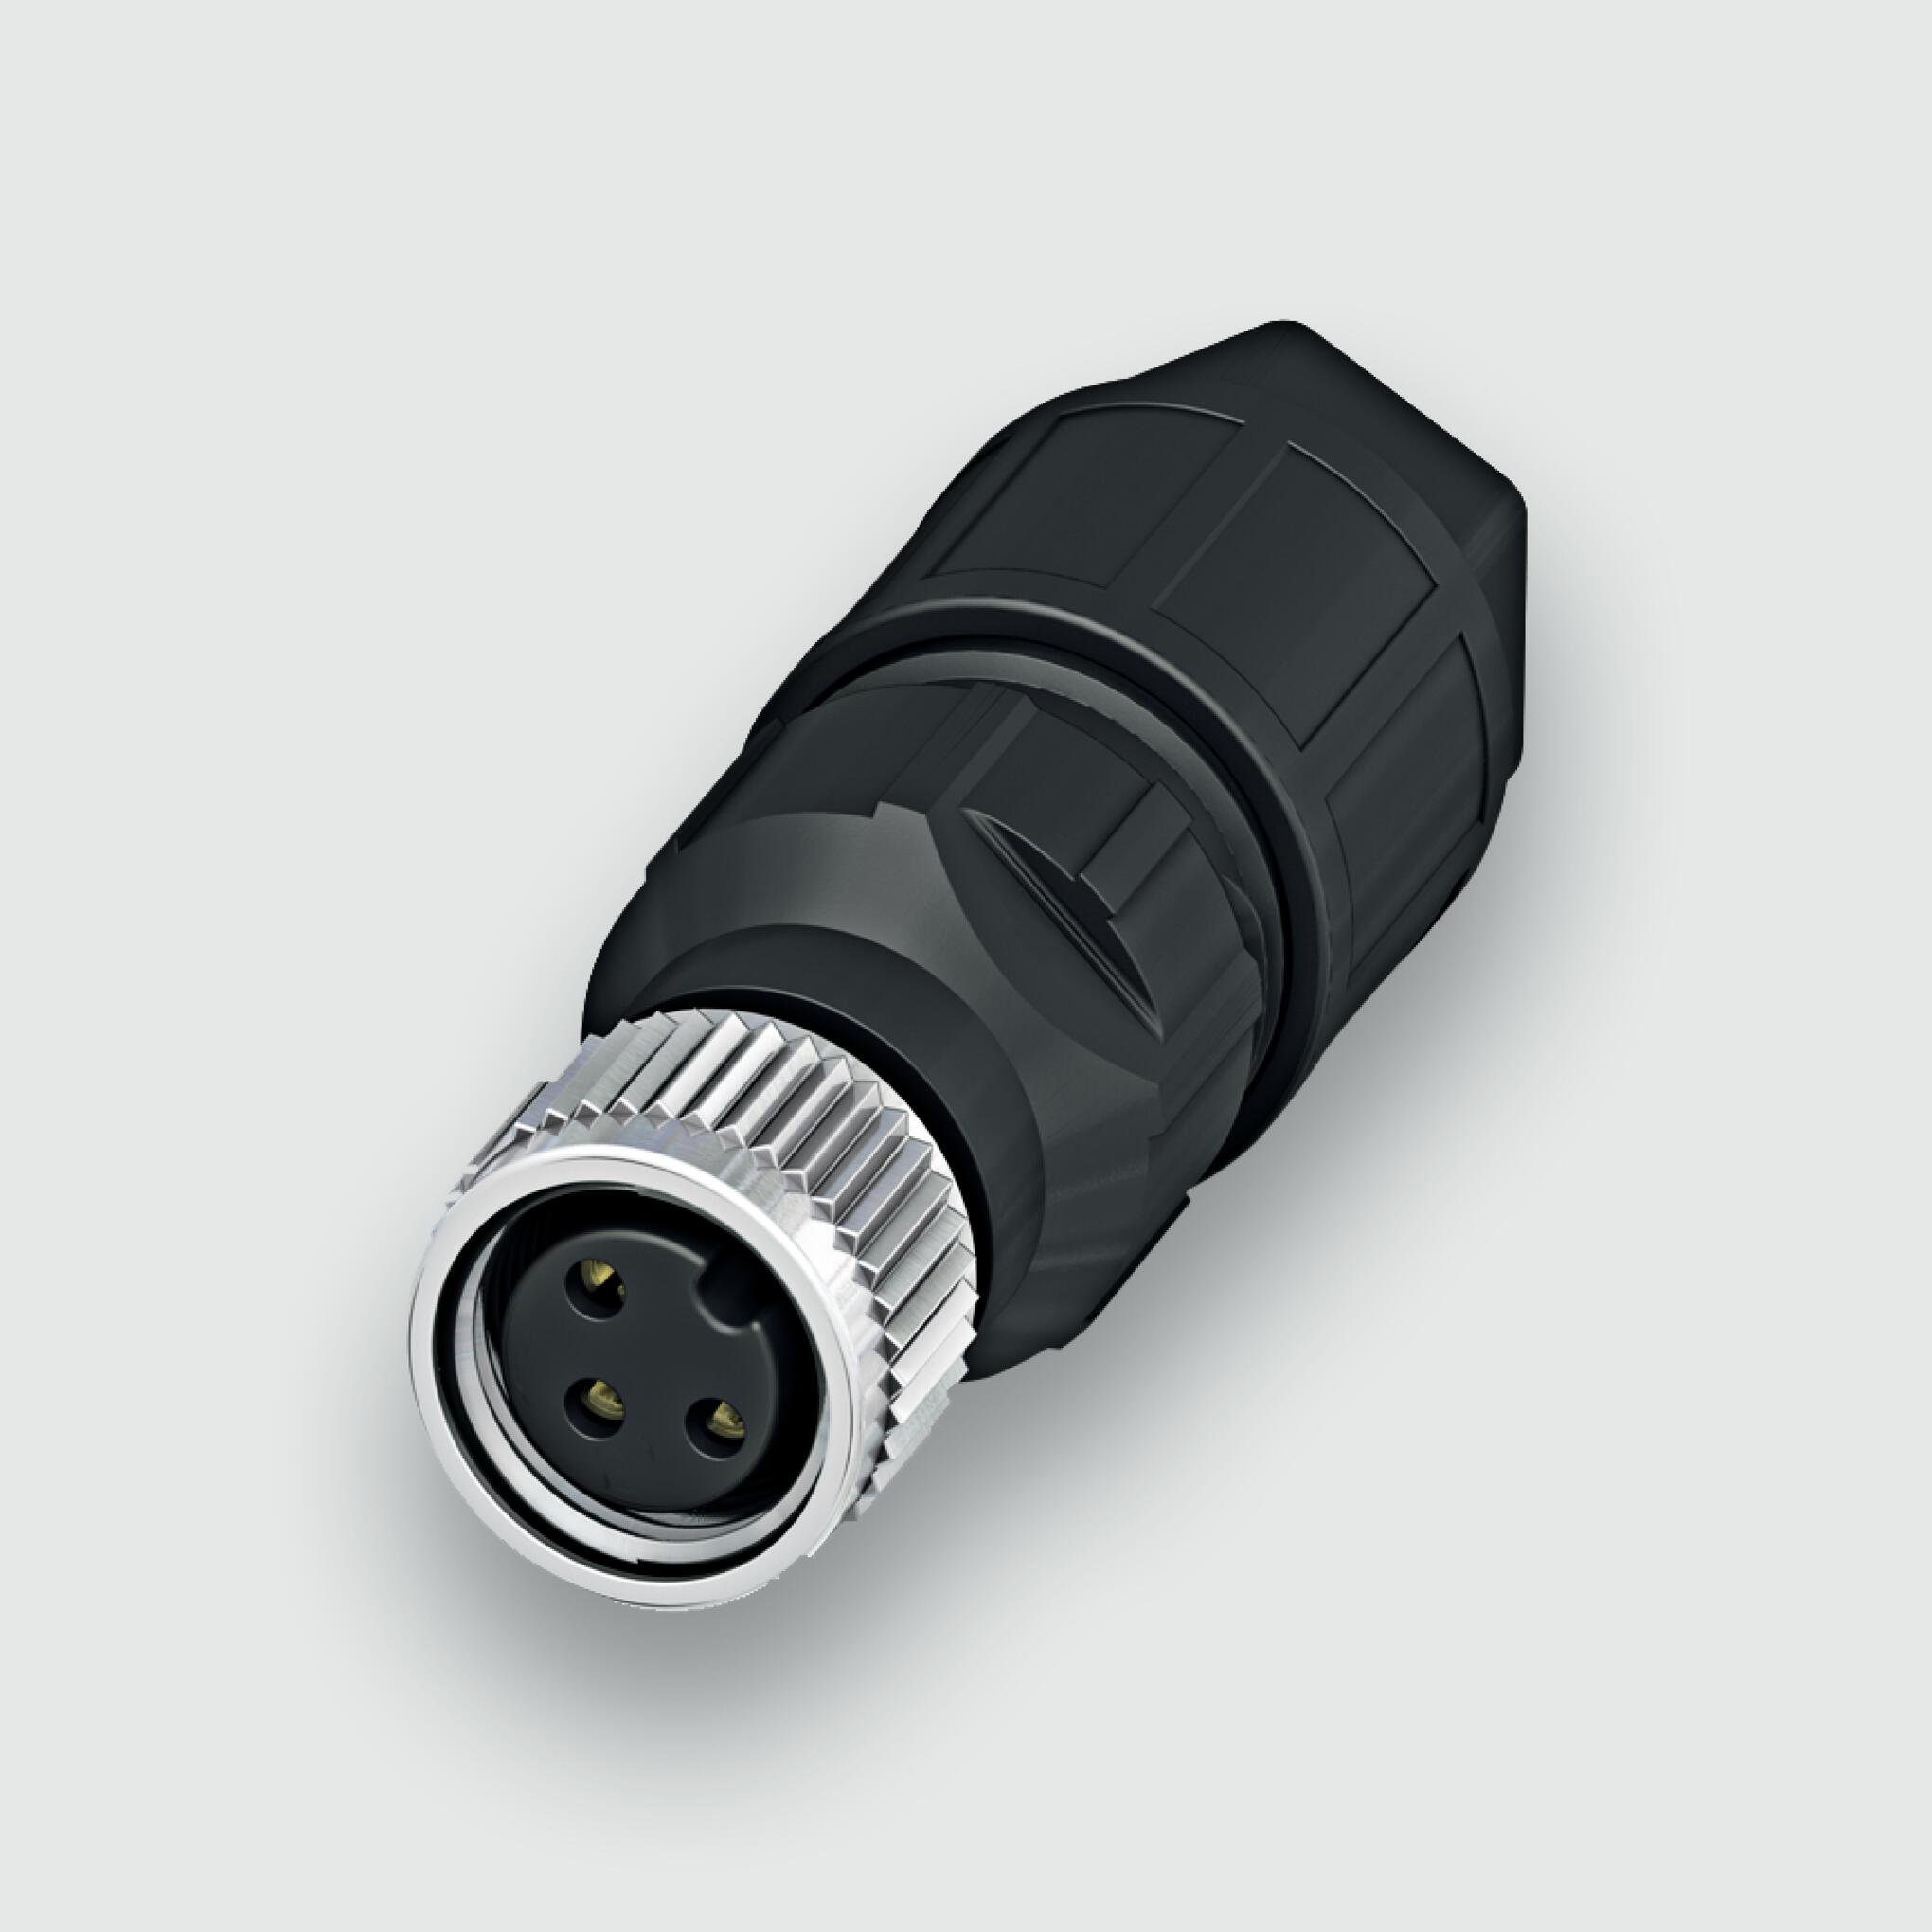 490125 - Actuator sensor interface - M8 - connector